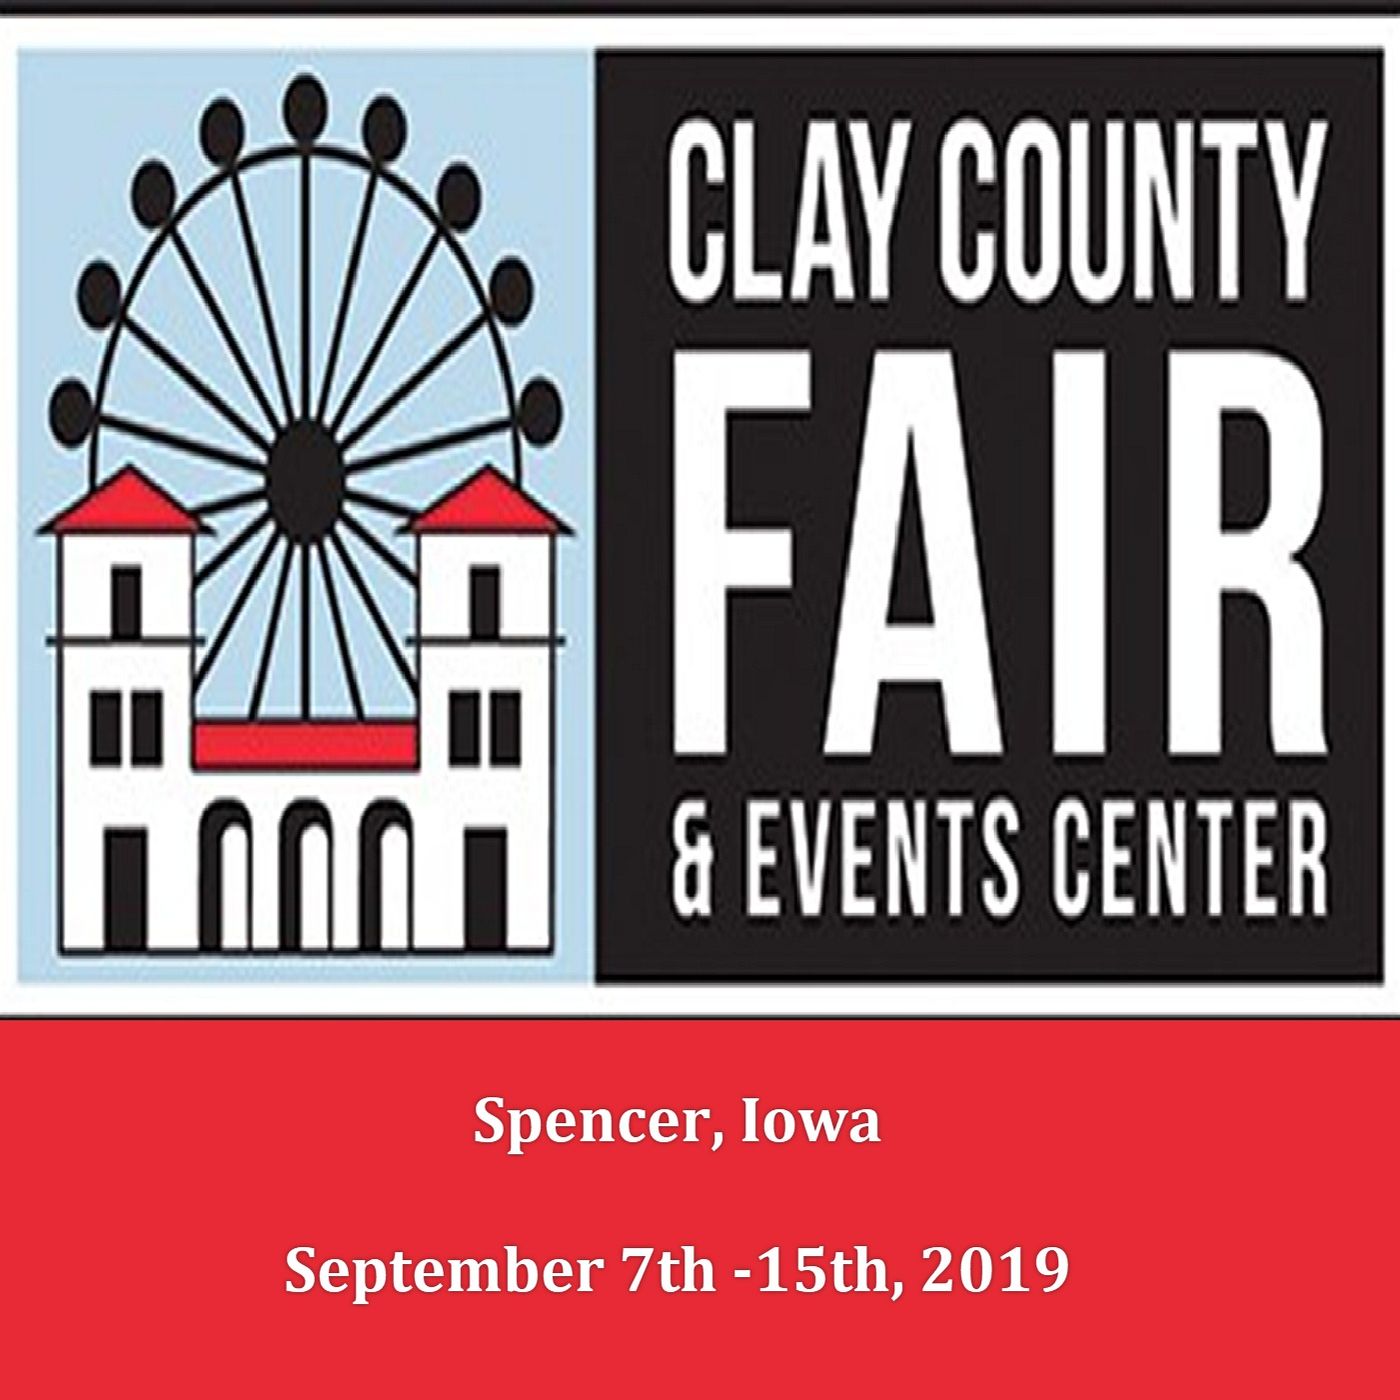 Iowas's Clay County Fair 2019